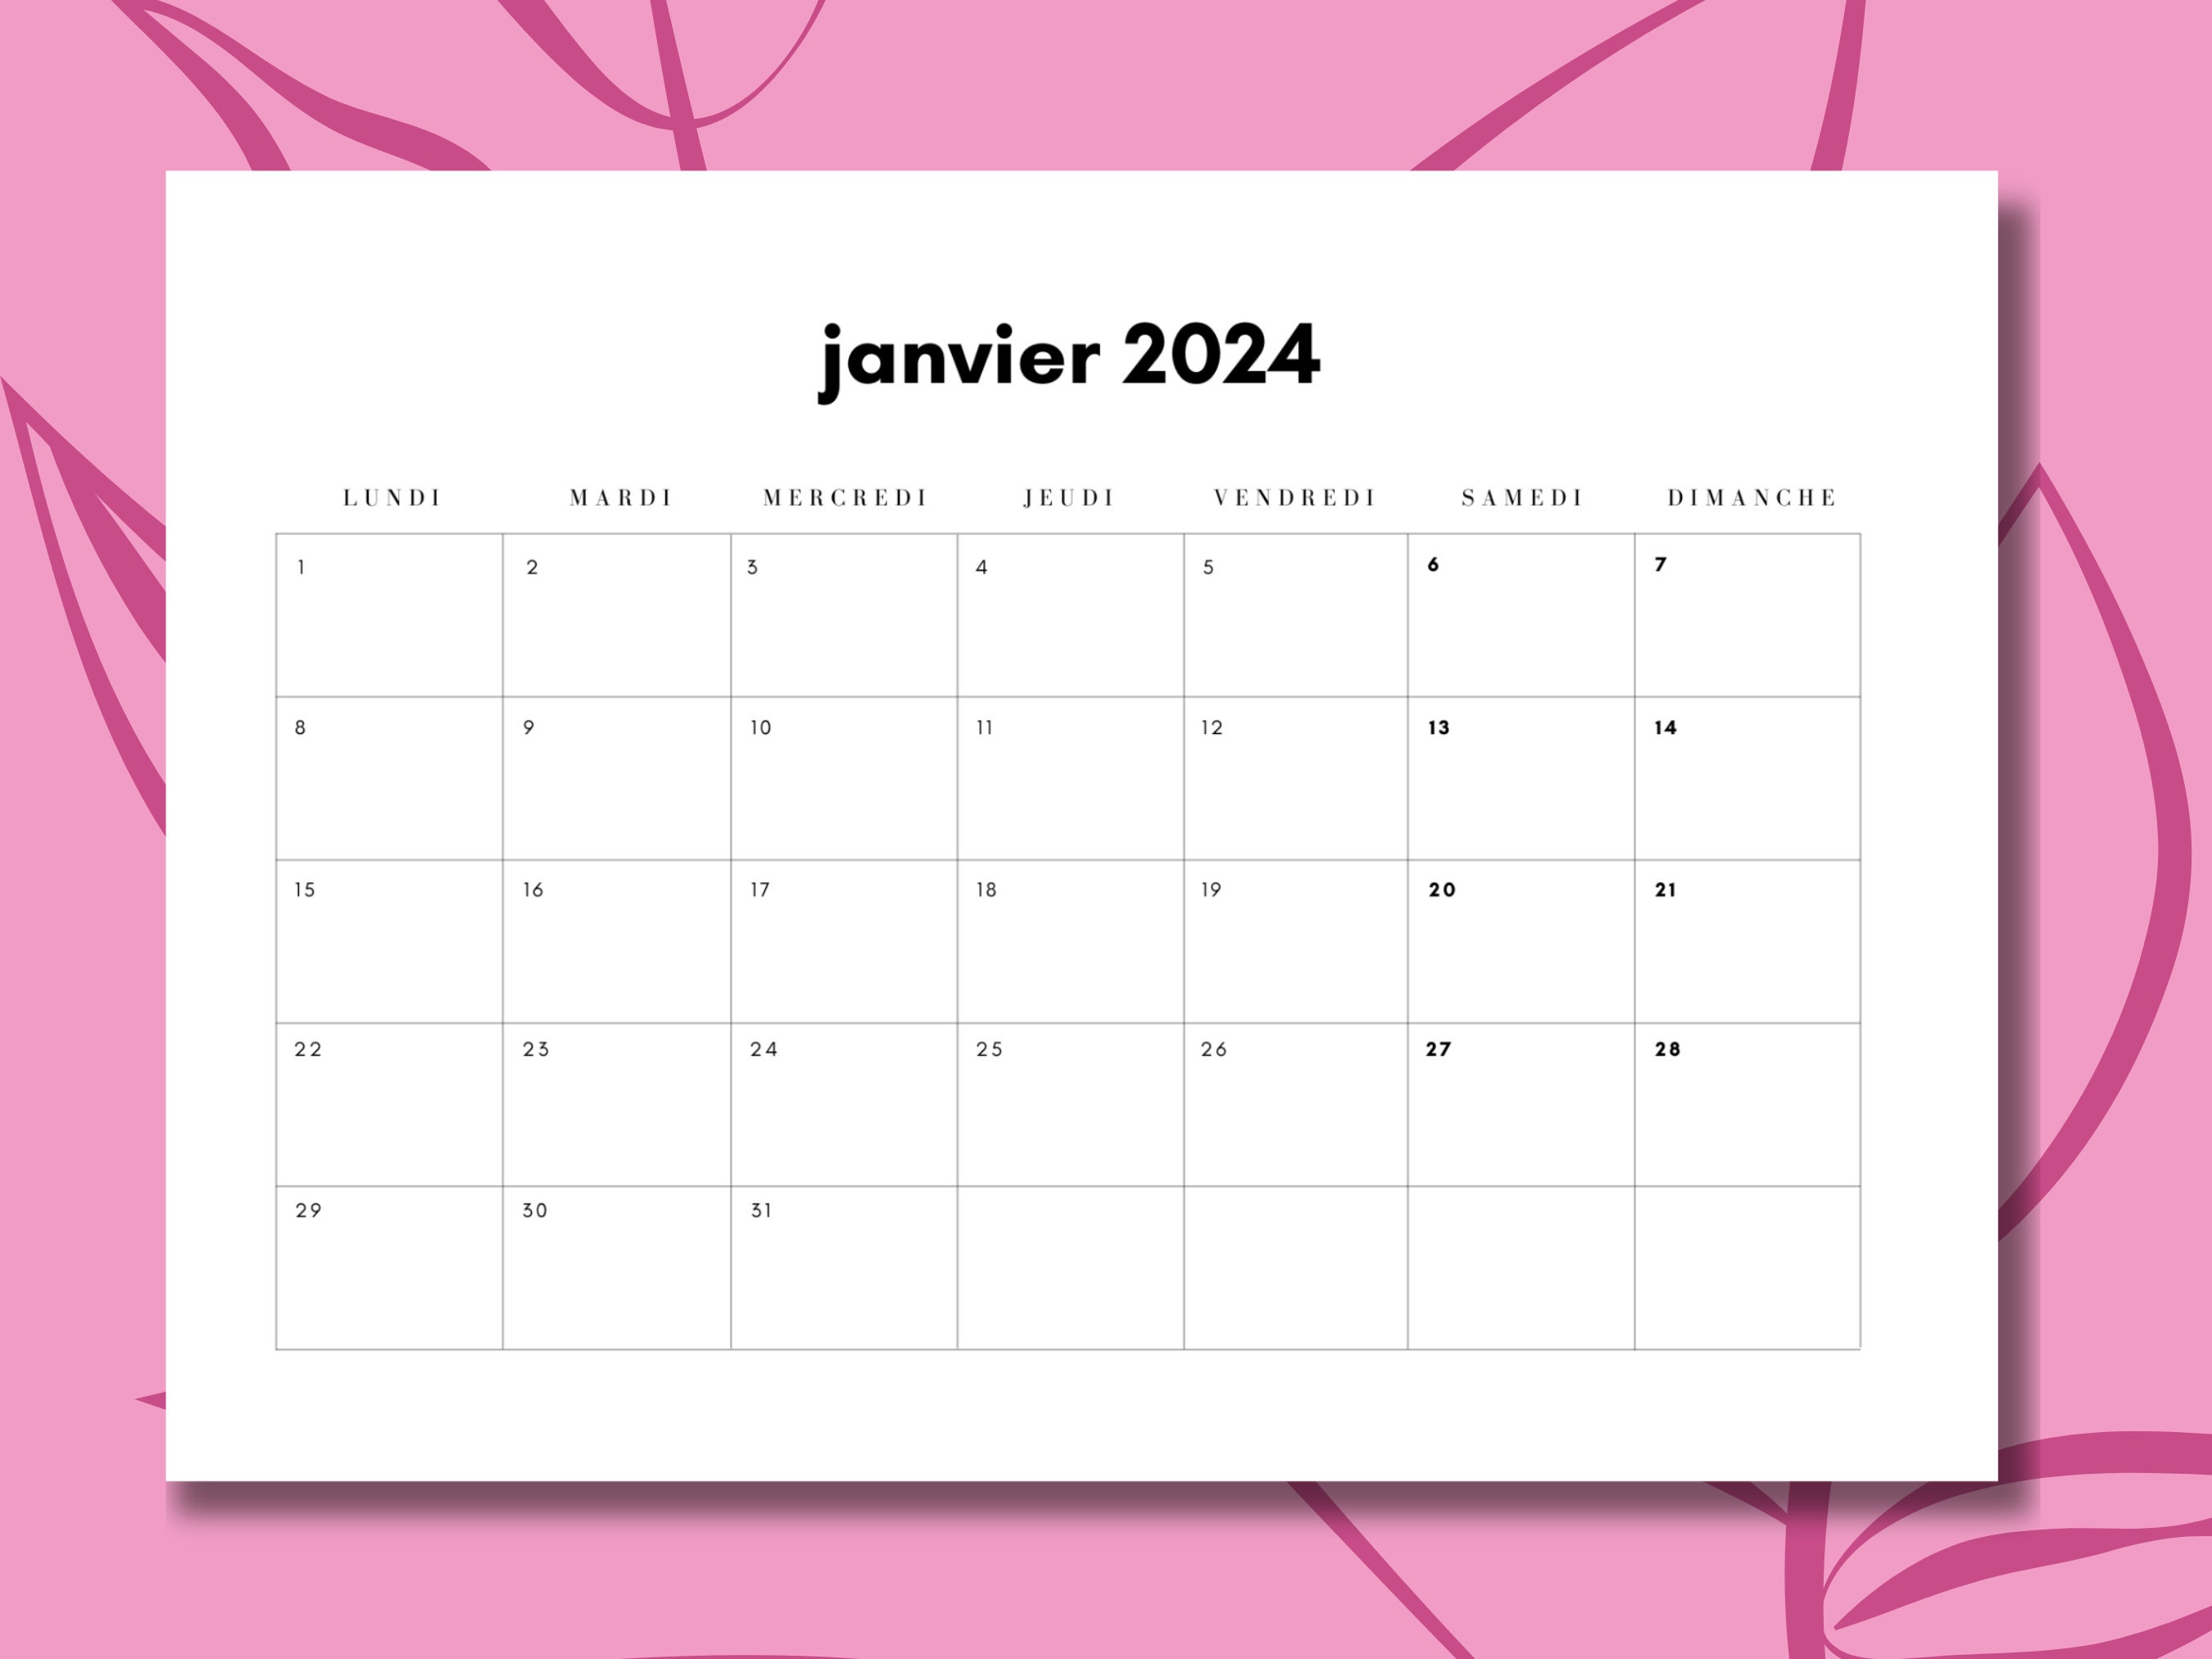 Calendrier planning octobre 2021 - septembre 2022, illustrations à